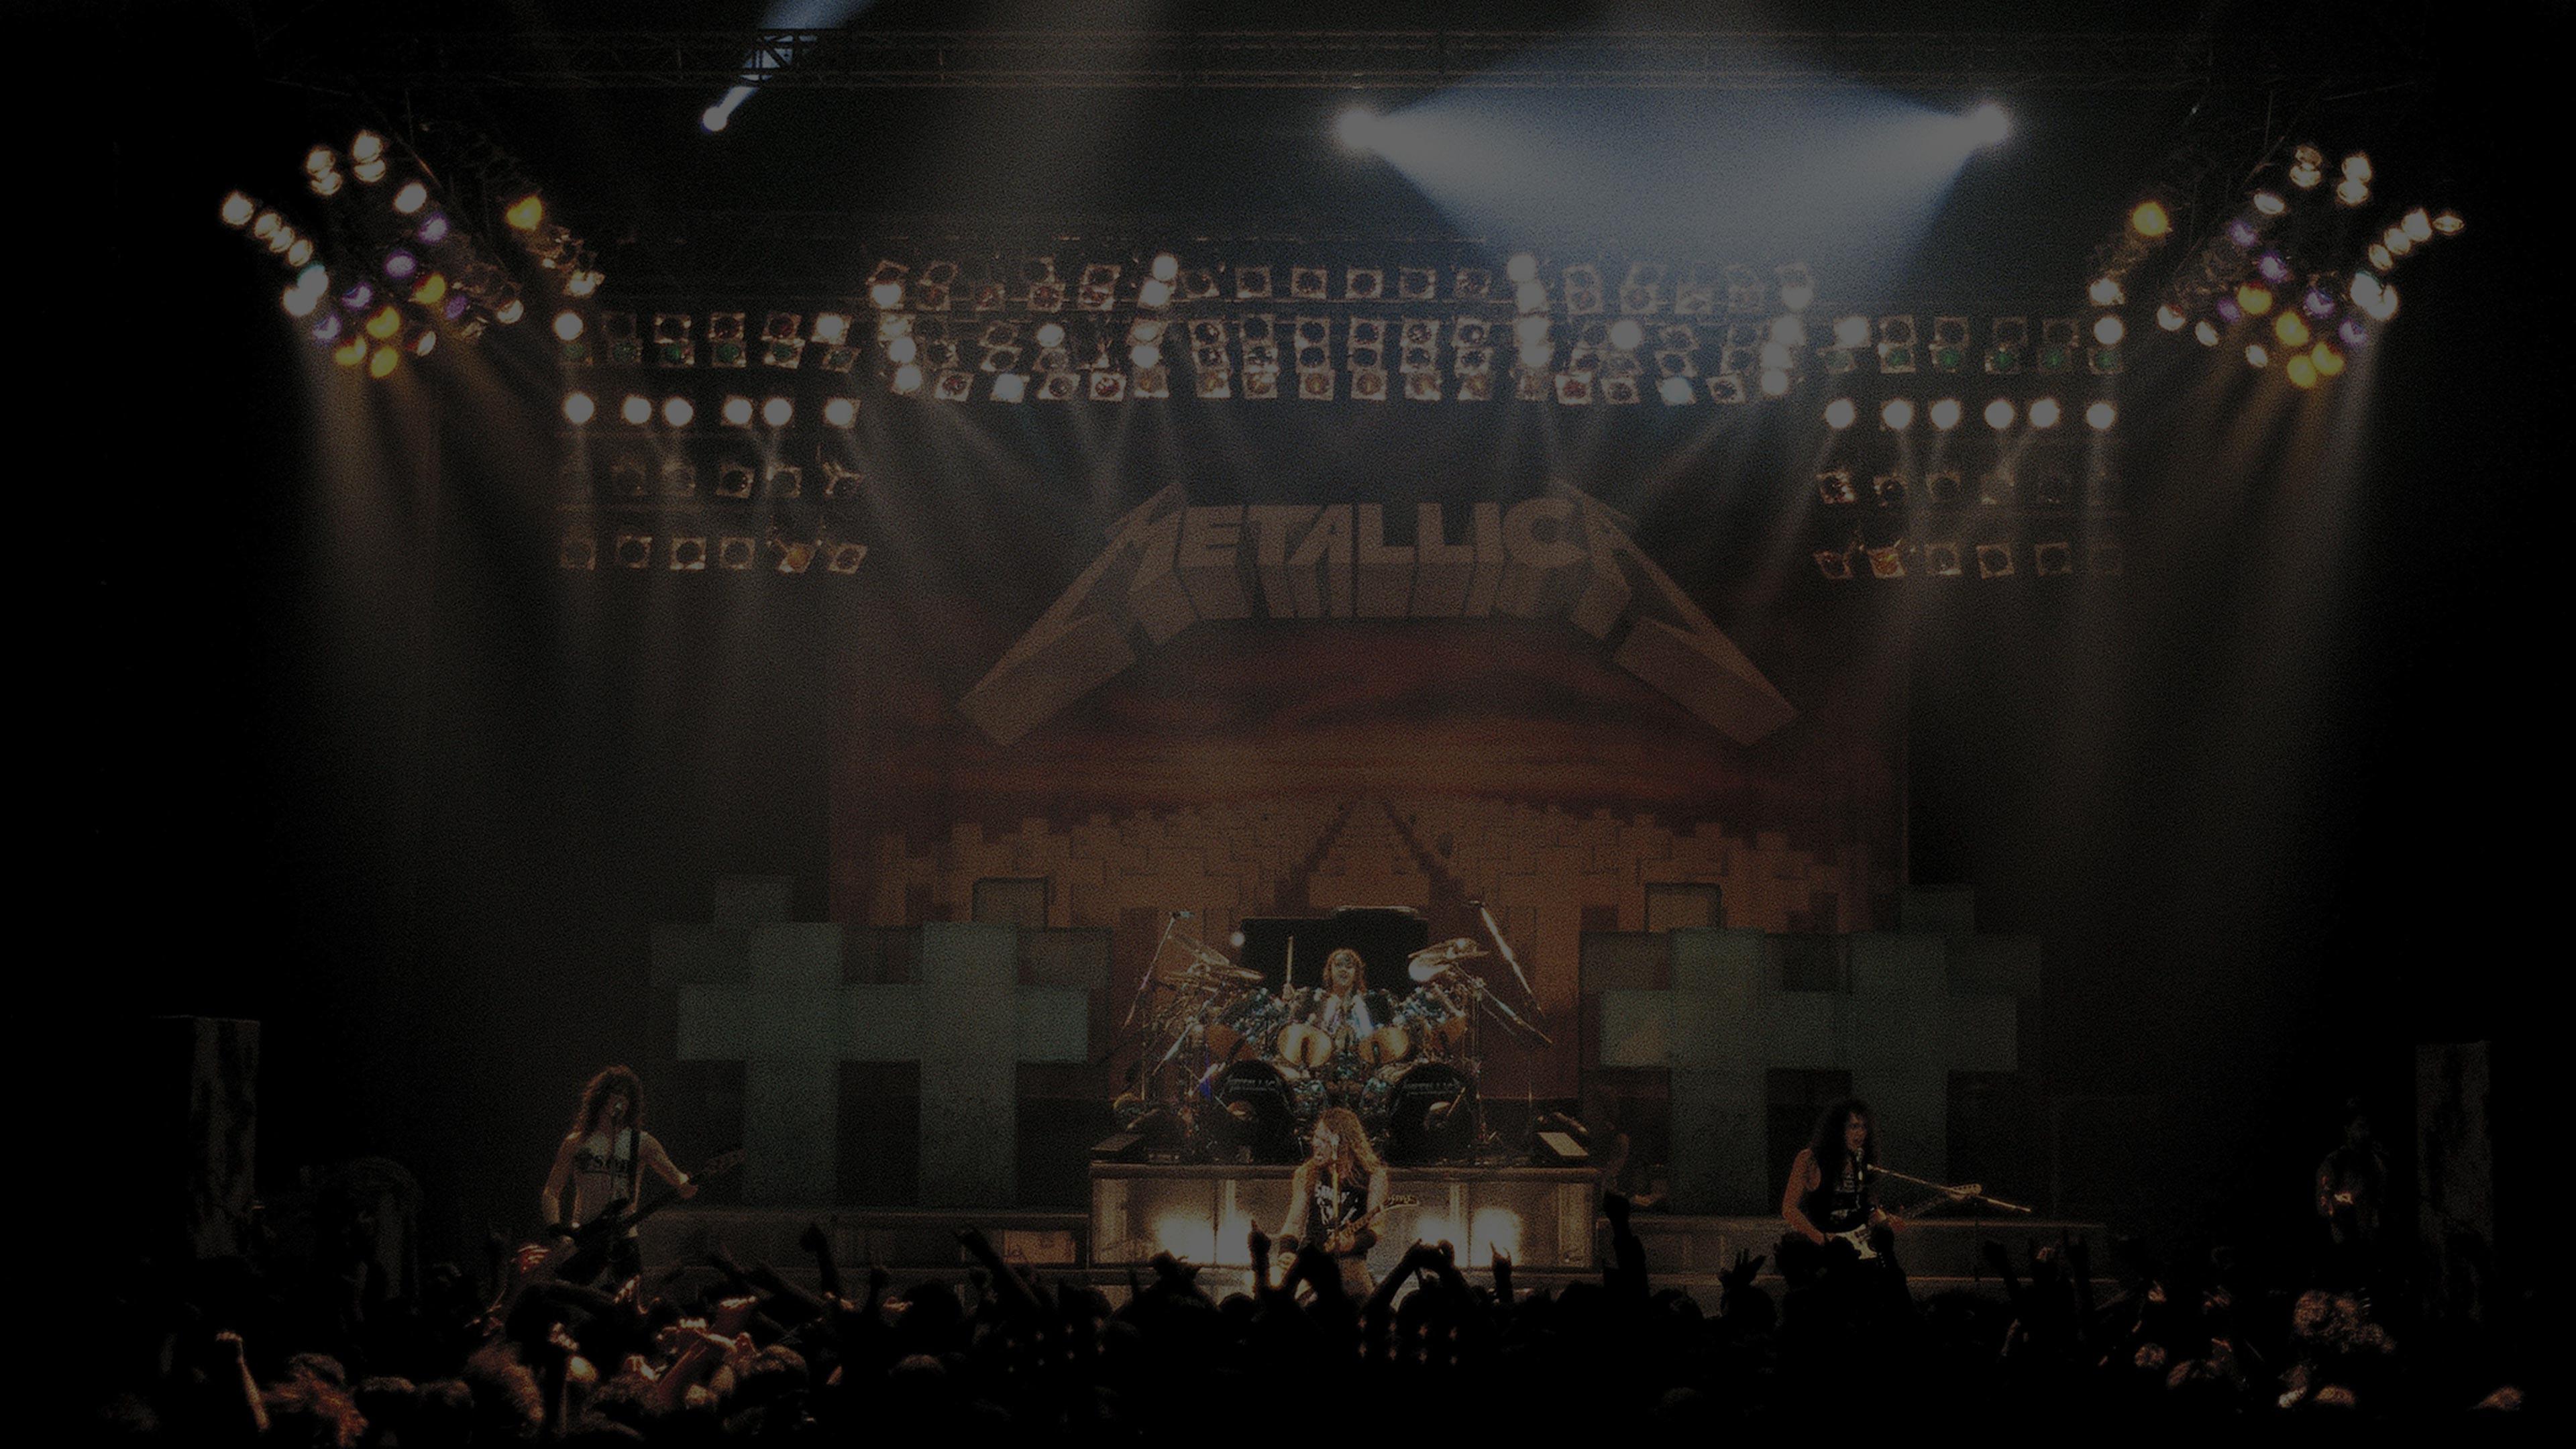 Metallica at Aichi Kousei Nenkin Kaikan in Nagoya, Japan on November 17, 1986